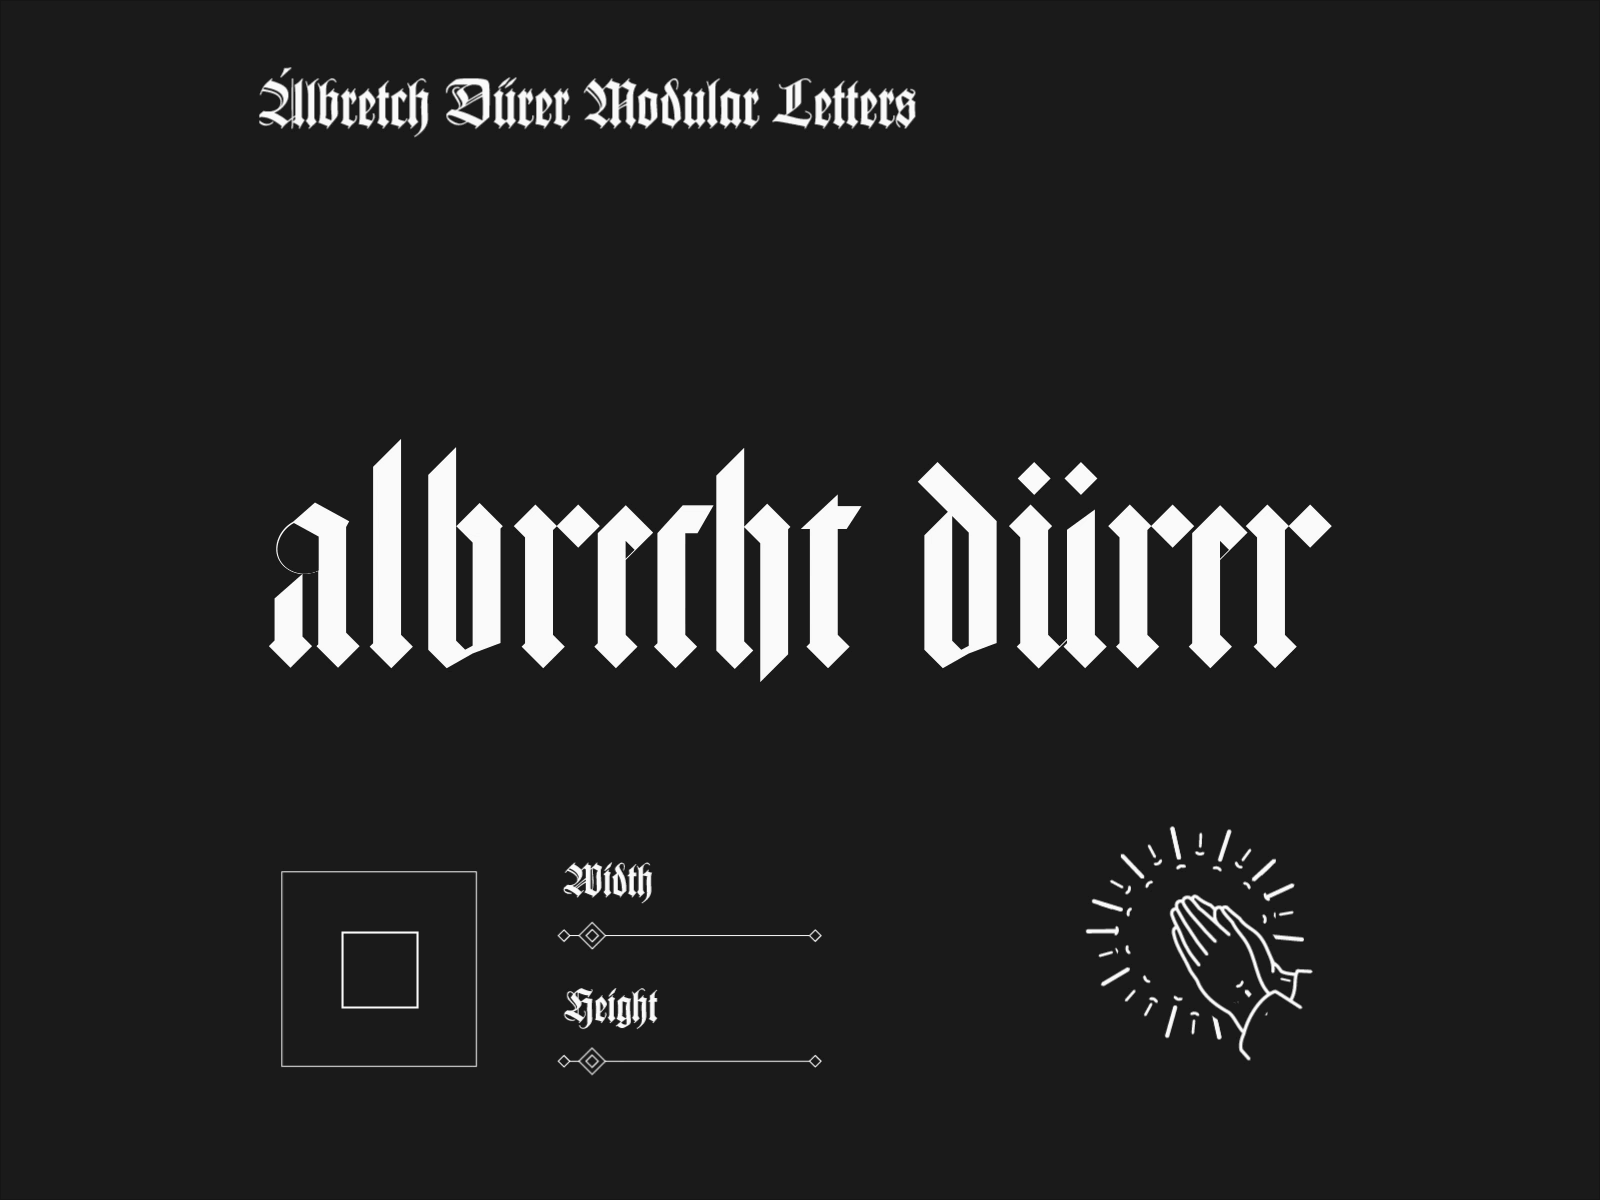 Albretch Durer Modular Letters animation design kinetic kinetic type modular type motion graphics typography variable type variablefont variabletype